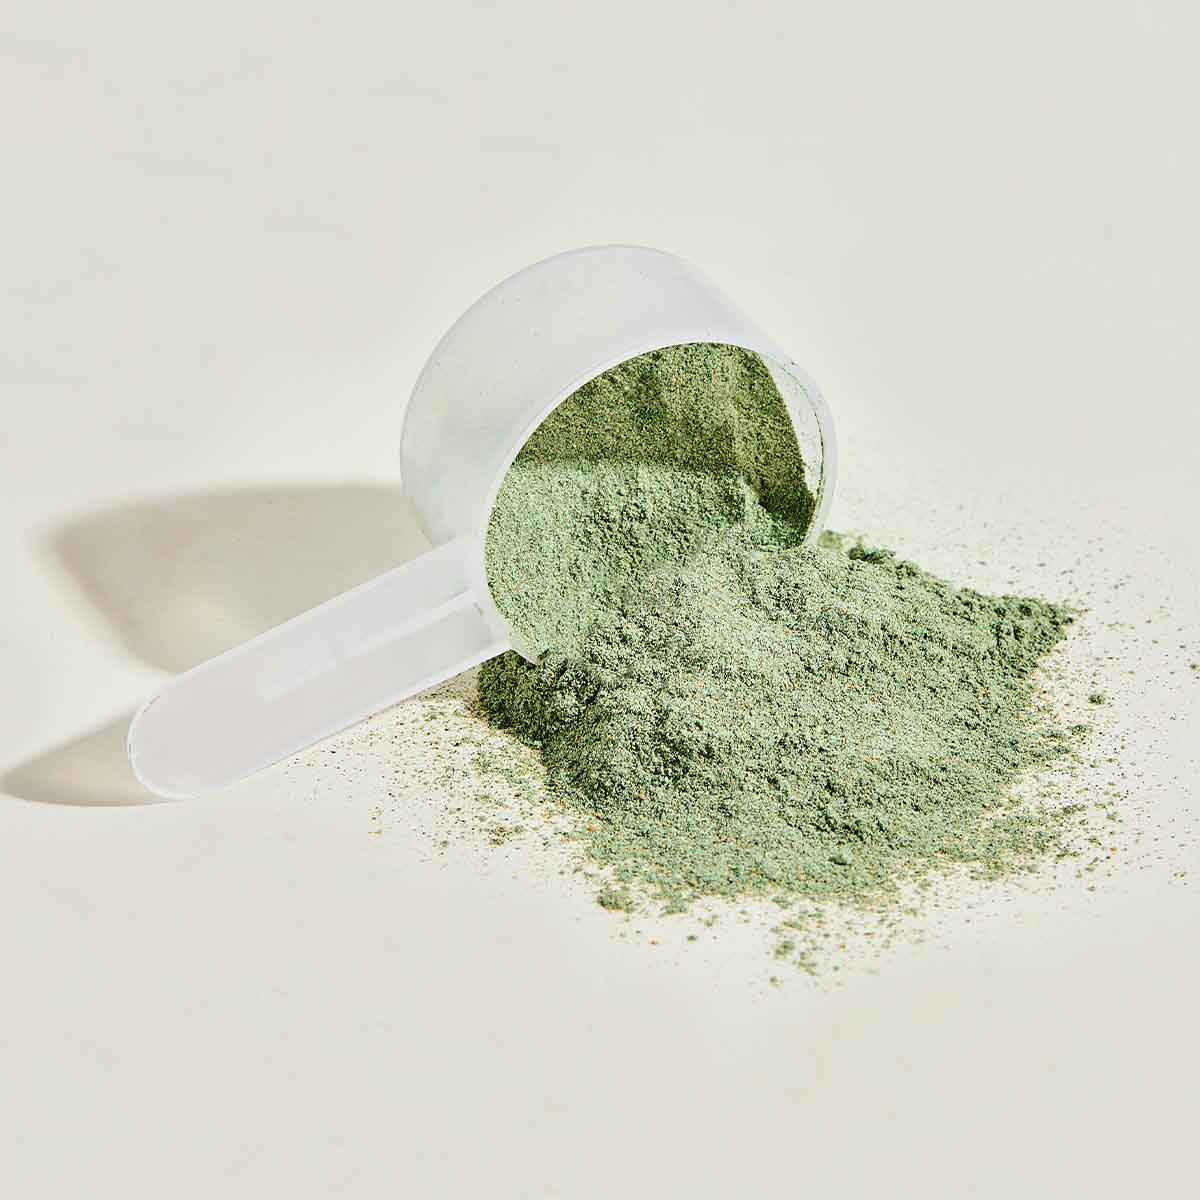 Amazing Grass Green SuperFood Antioxidant Drink Powder, Berry - 14.8 oz jar